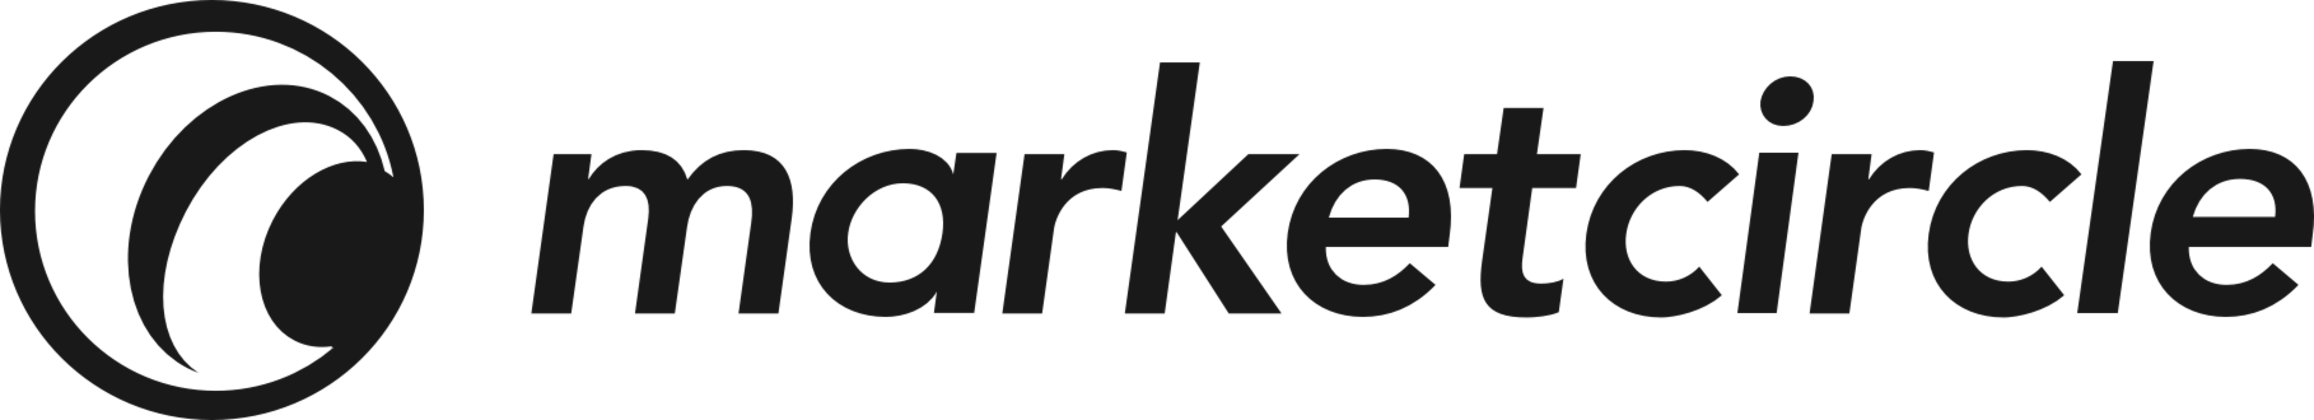 Marketcircle Logo.